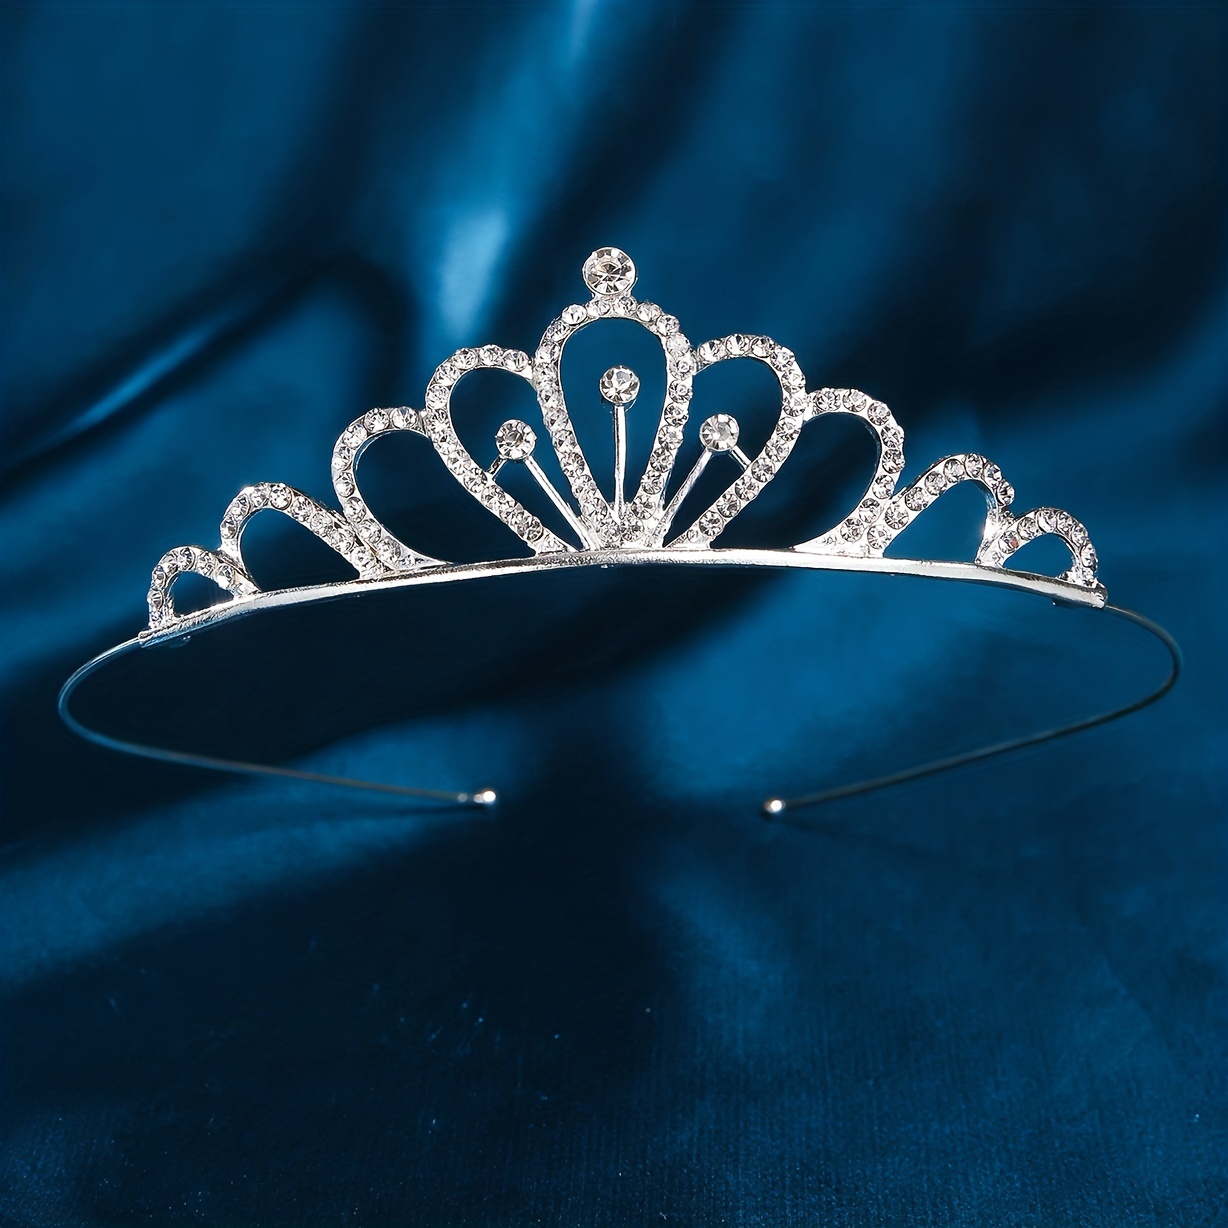 1 Corona De Metal Plateado Con Diamantes De Imitación, Corona Para El Pelo,  Accesorios Para El Cabello De Princesa, Boda, Novia, Elegancia, Corona, Ti